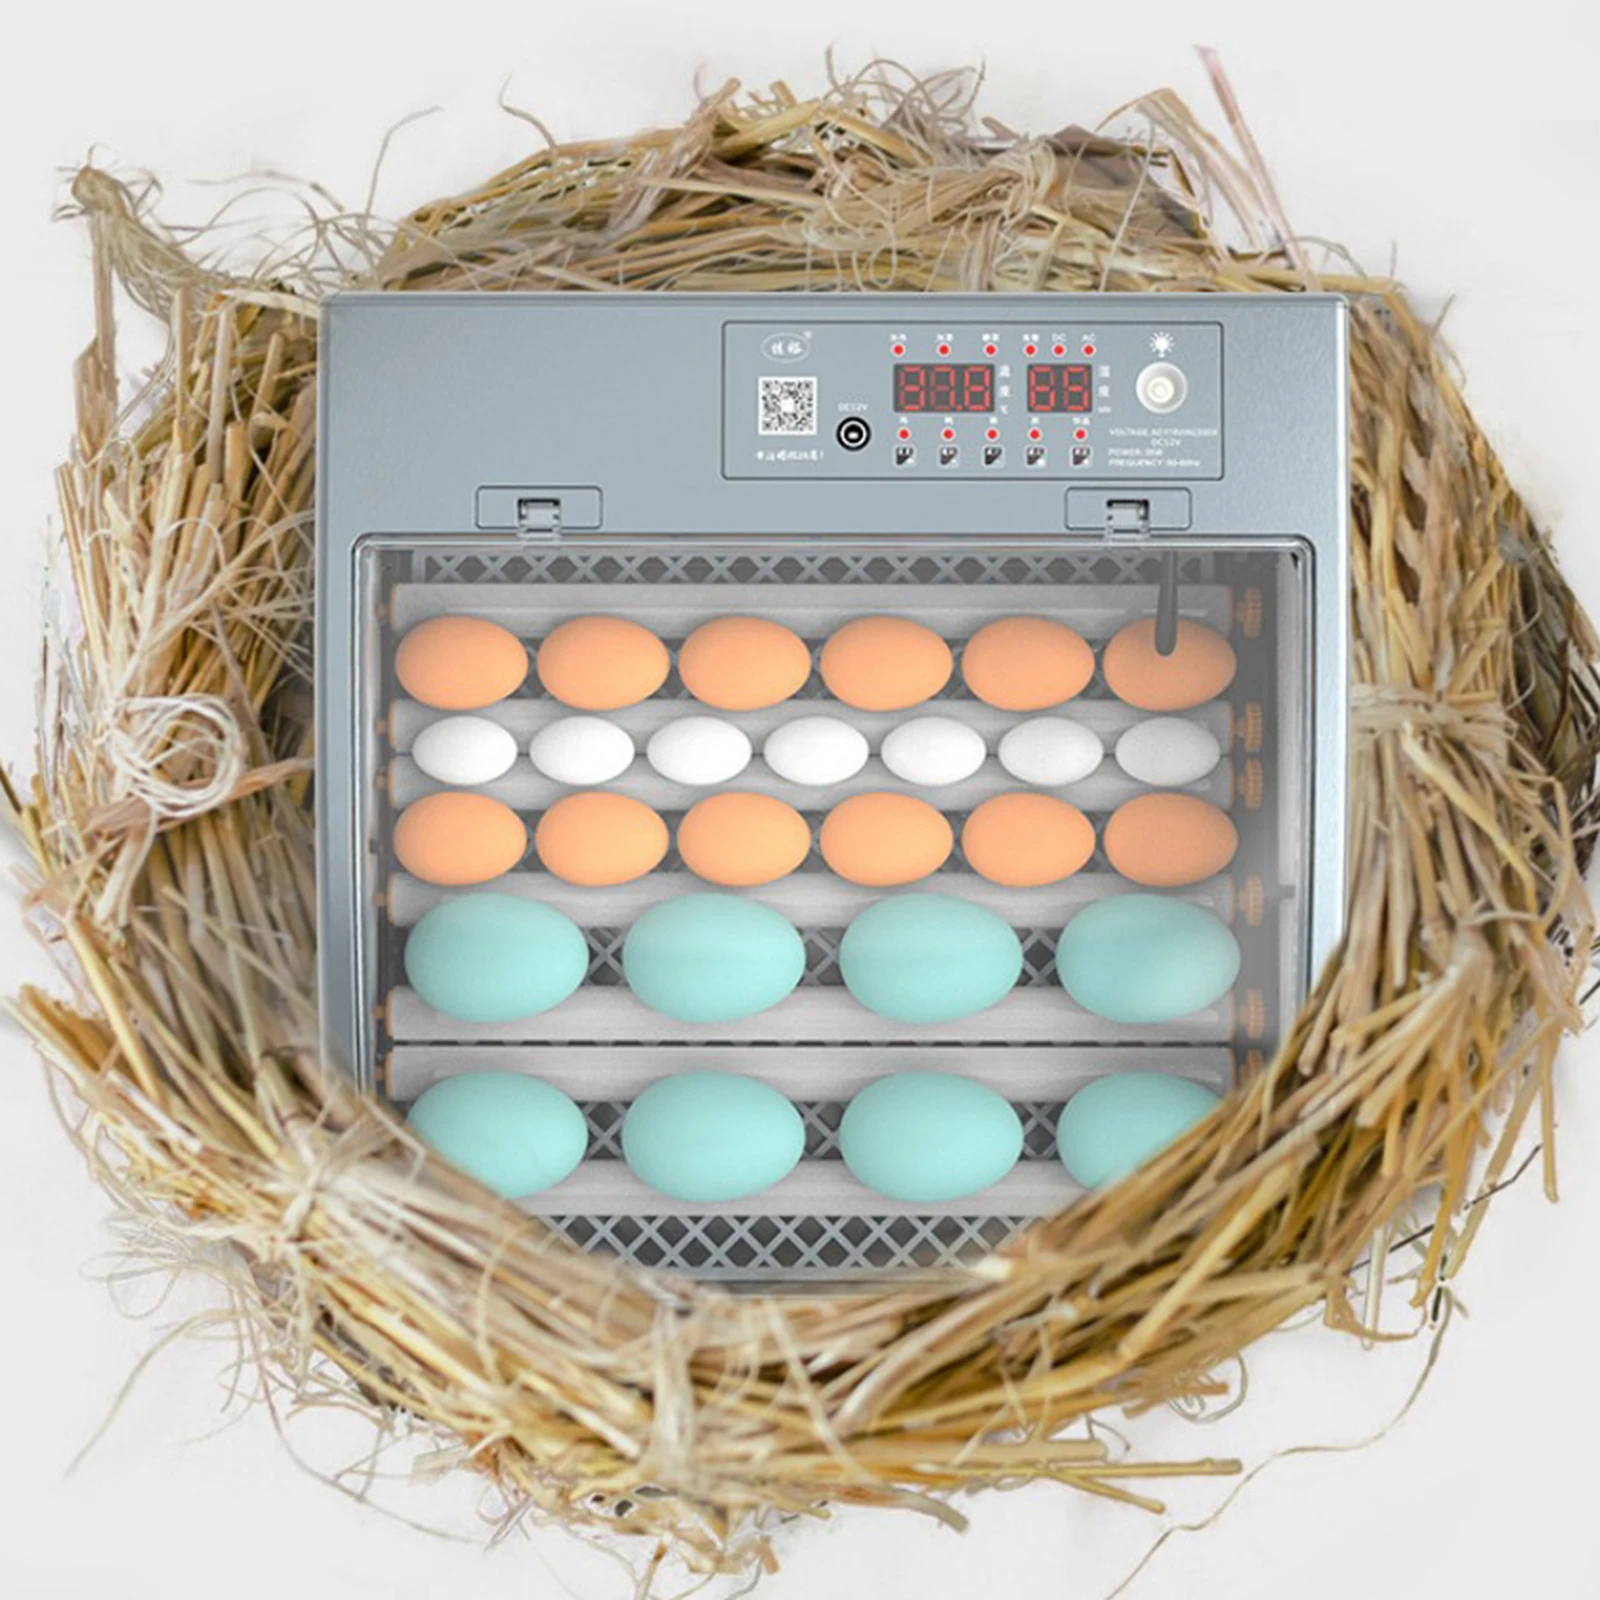 US 110V Eggs Incubator Brooder Bird Quail Chick Hatchery Incubator Poultry Hatcher Turner Automatic Farm Incubation Tools